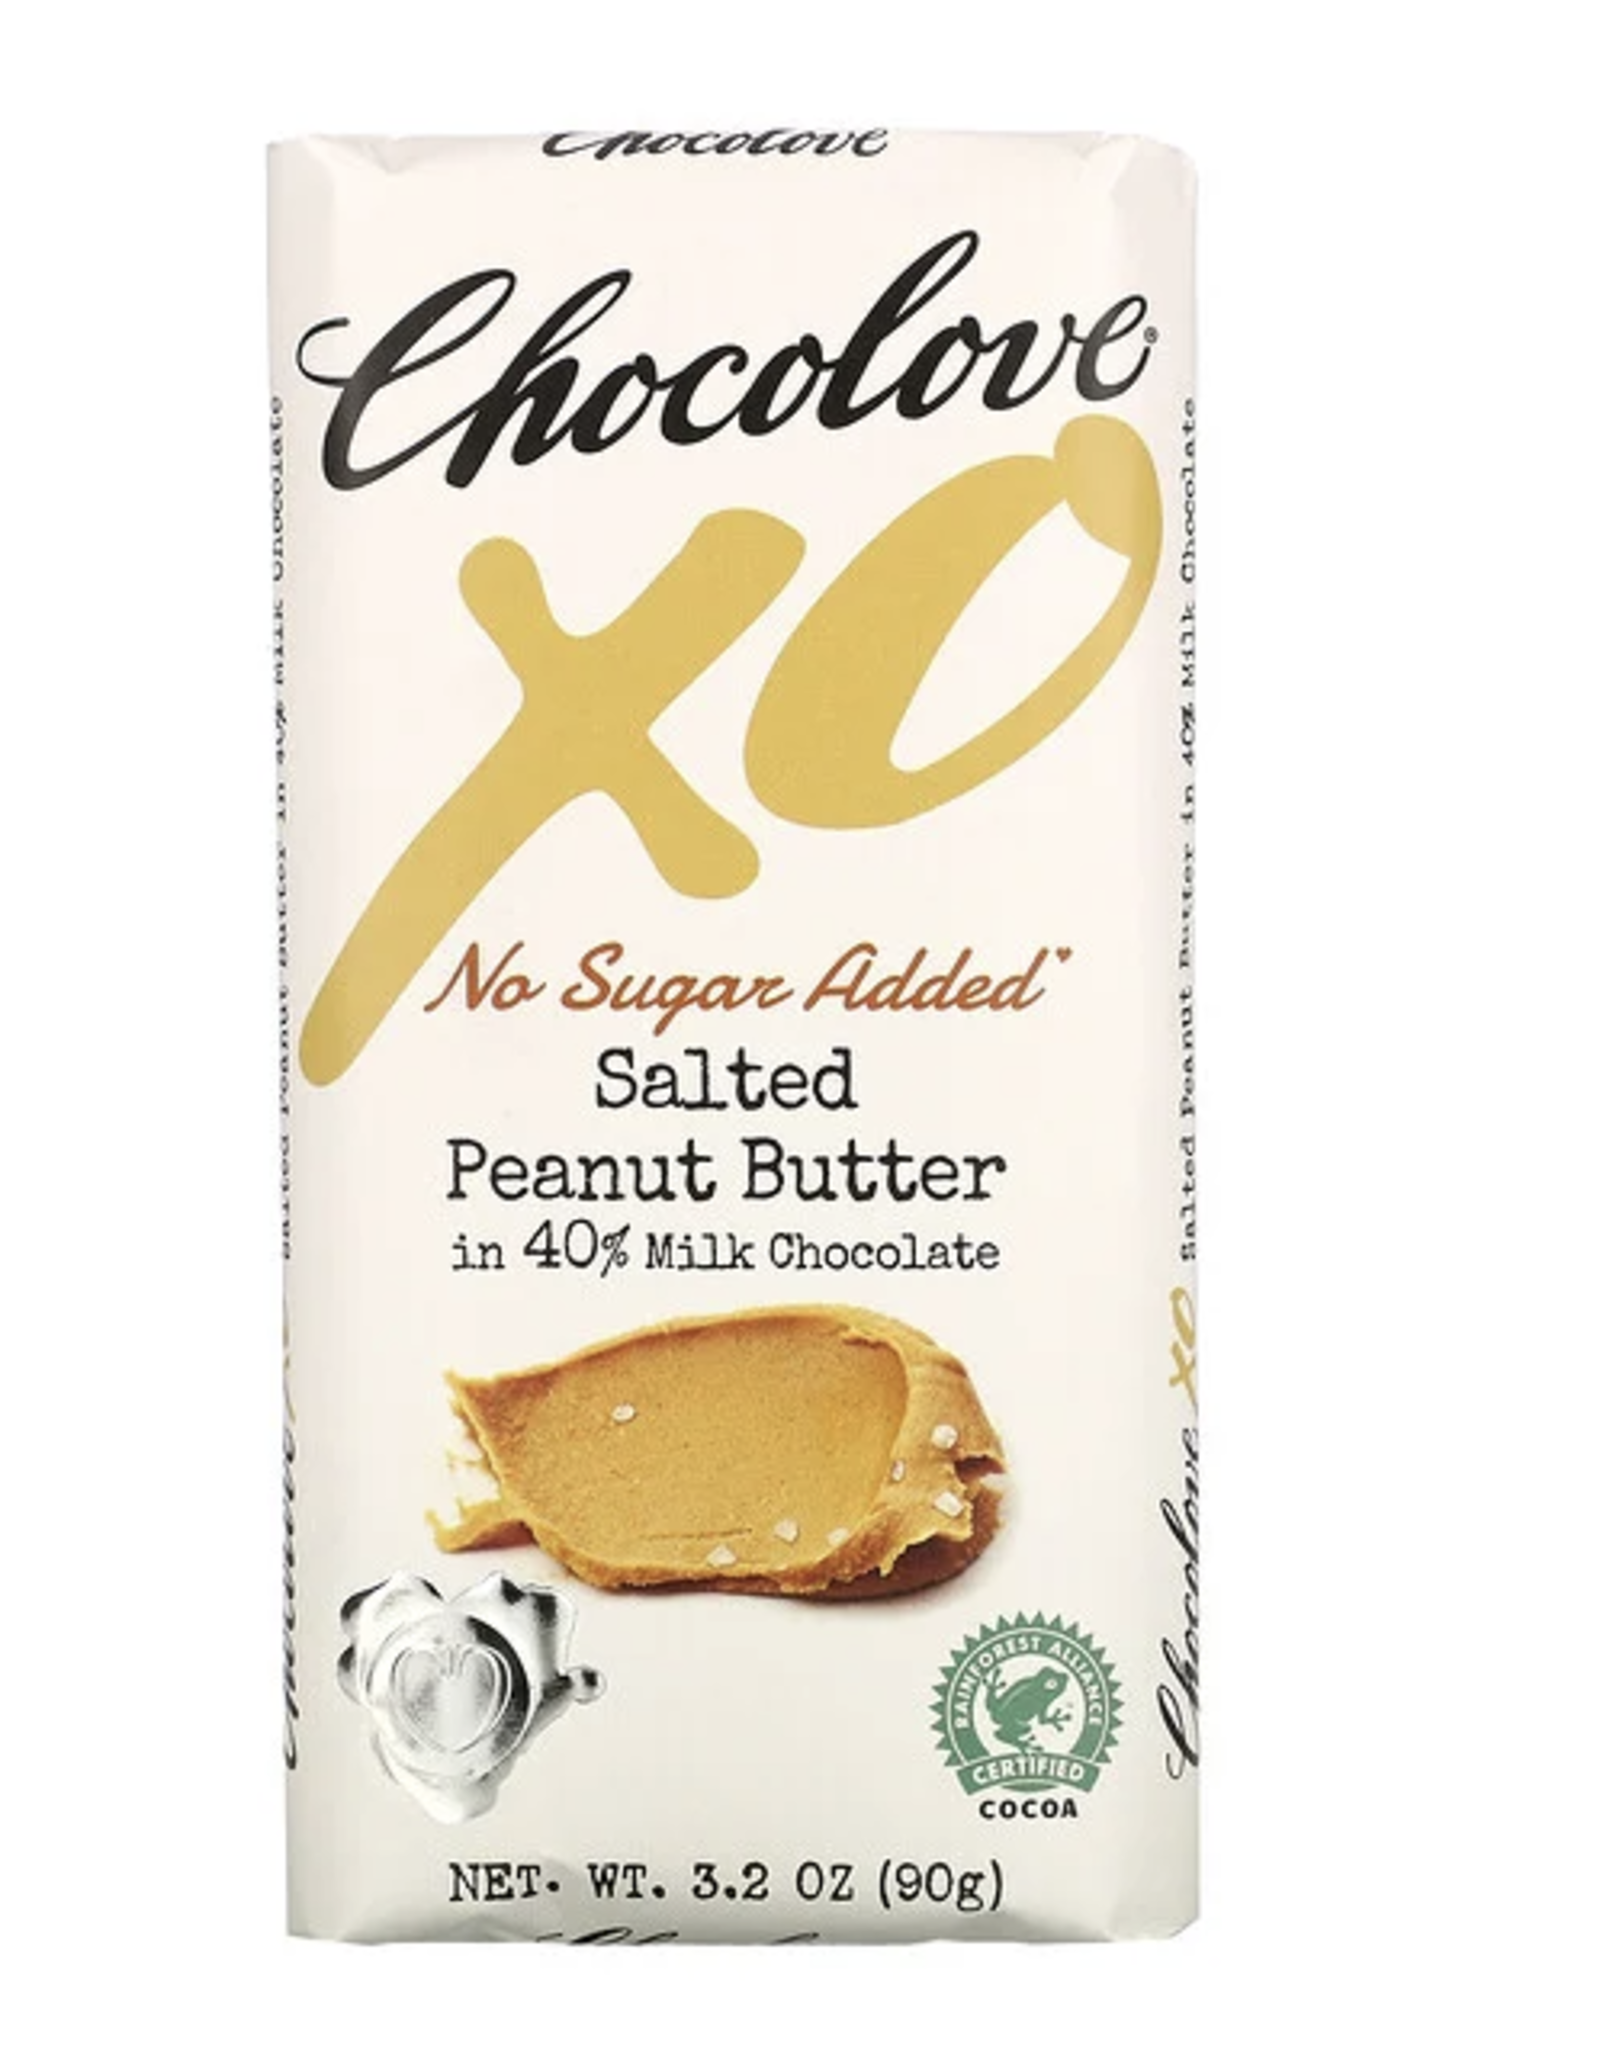 Chocolove XO Salted Peanut Butter Bar